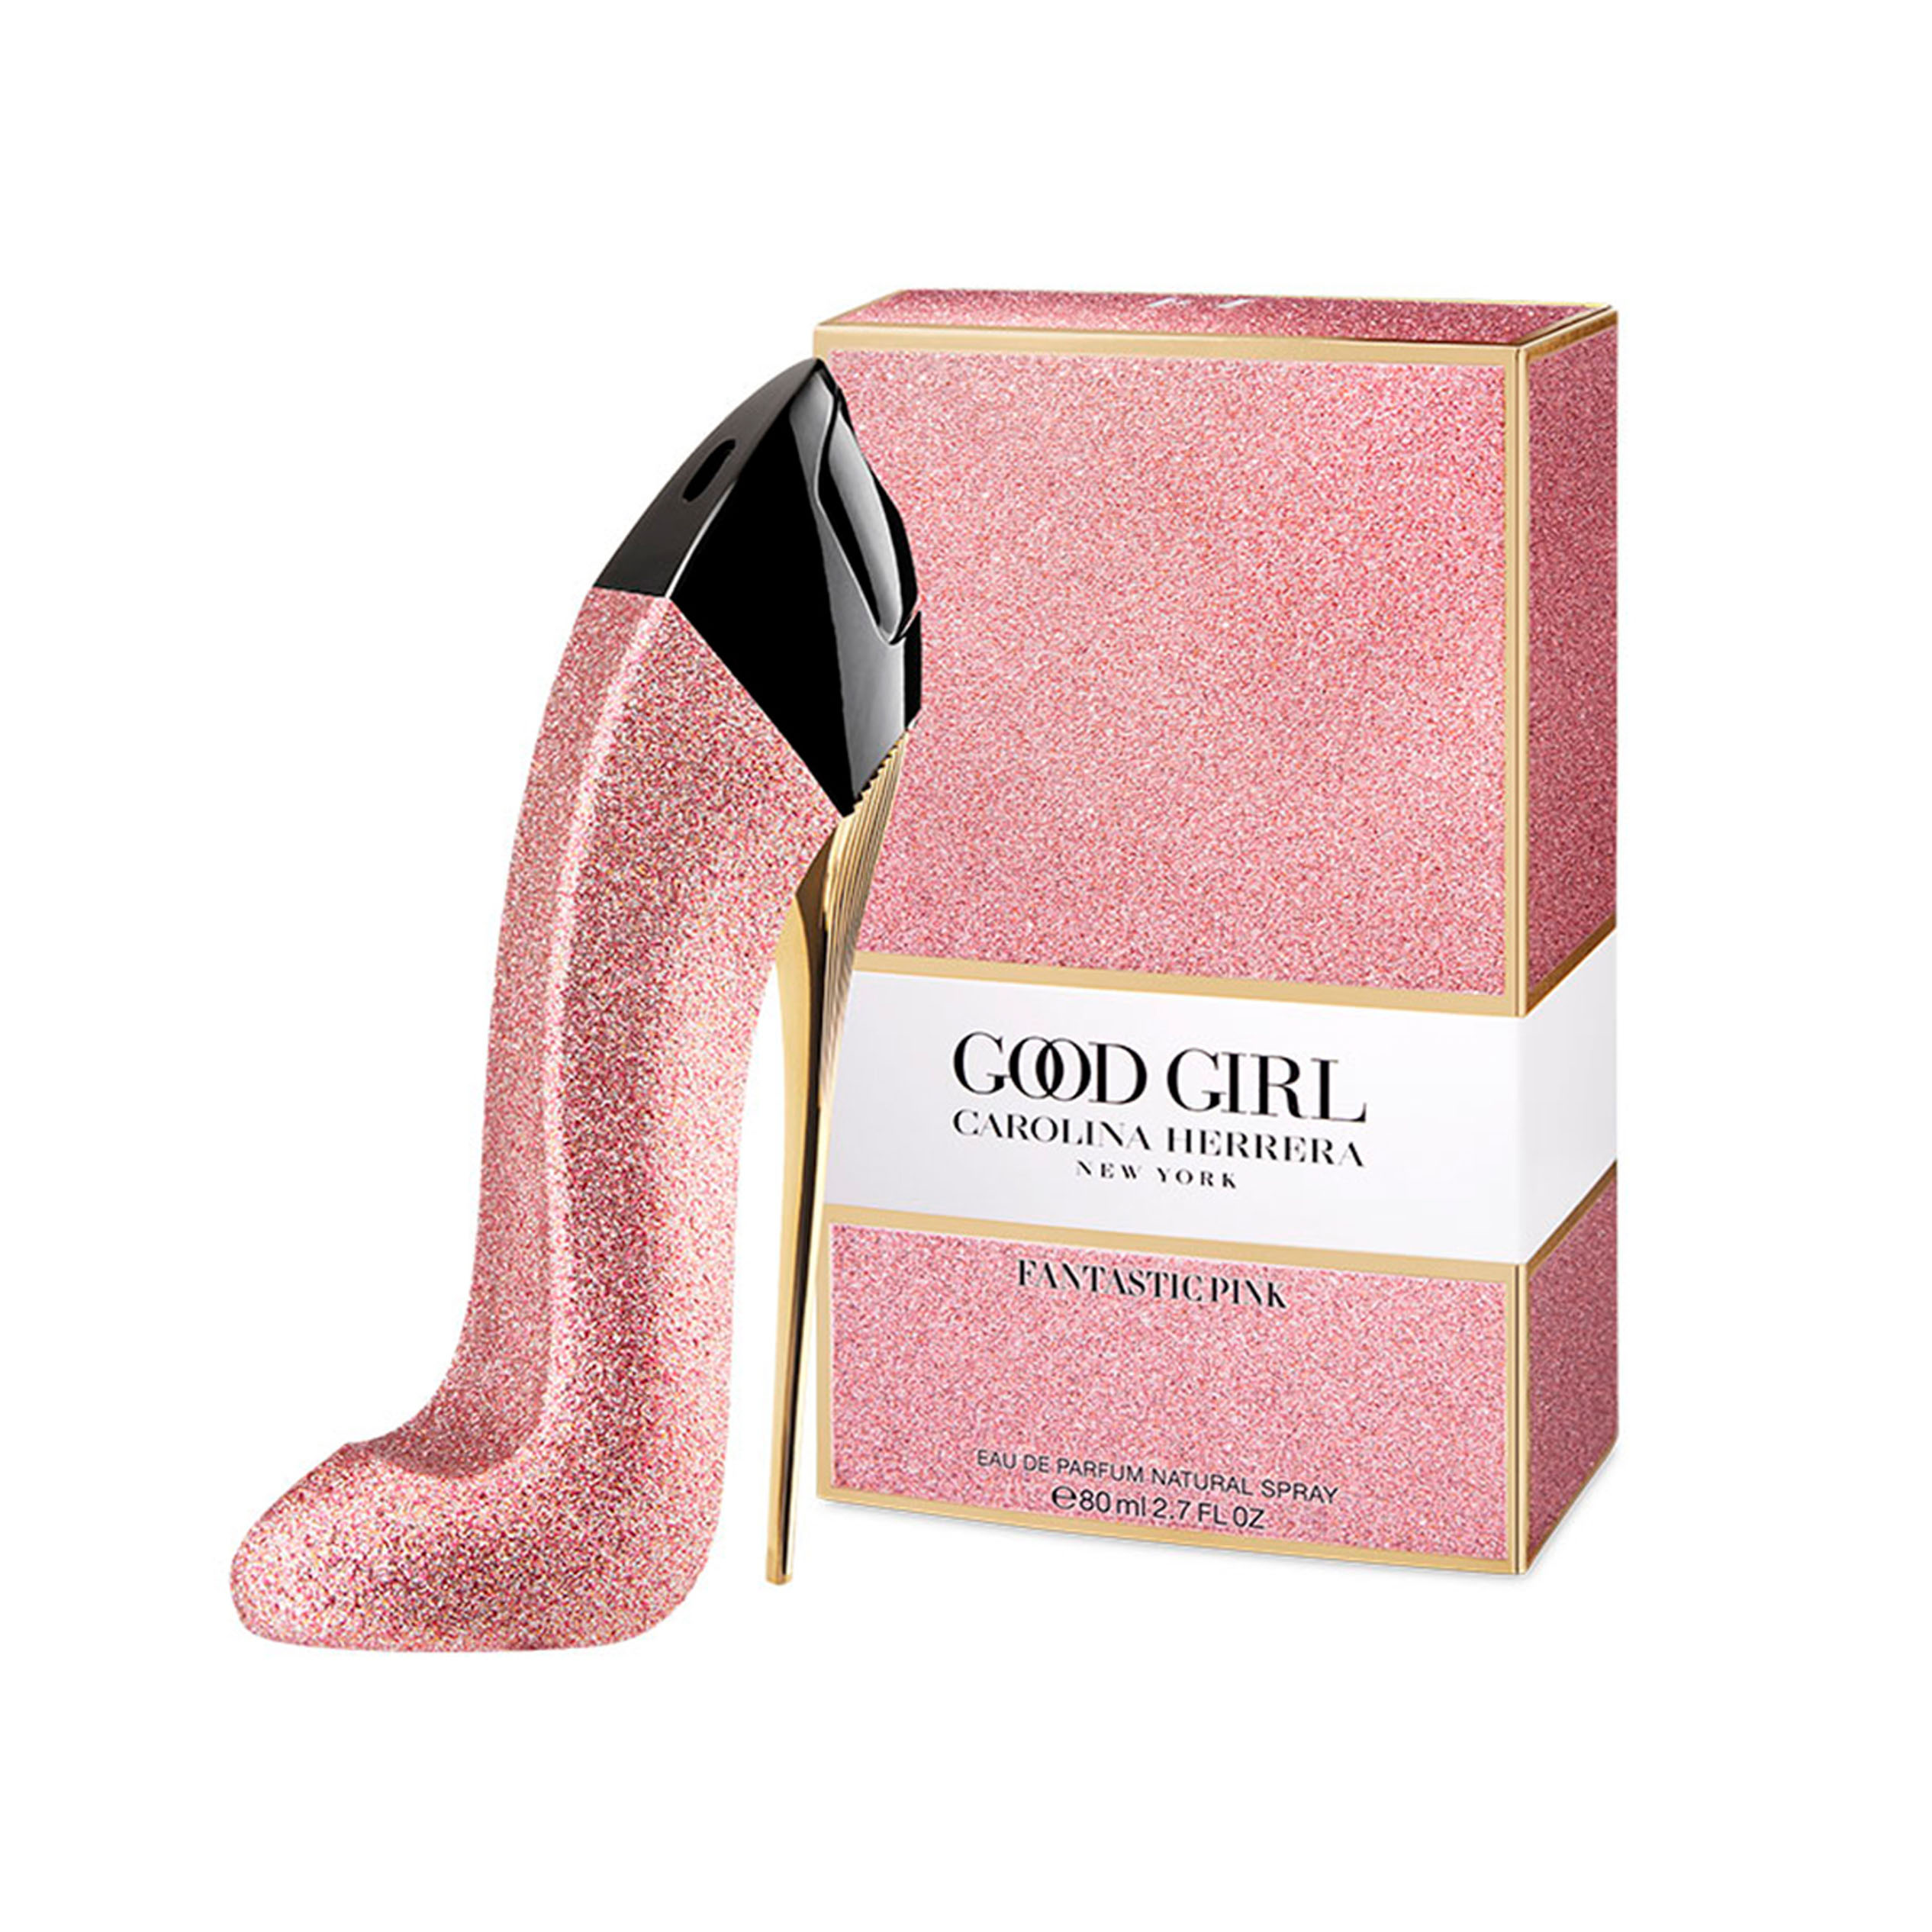 Perfume Good Girl Fantastic Pink Carolina Herrera   (Replica Con Fragancia Importada)- Mujer